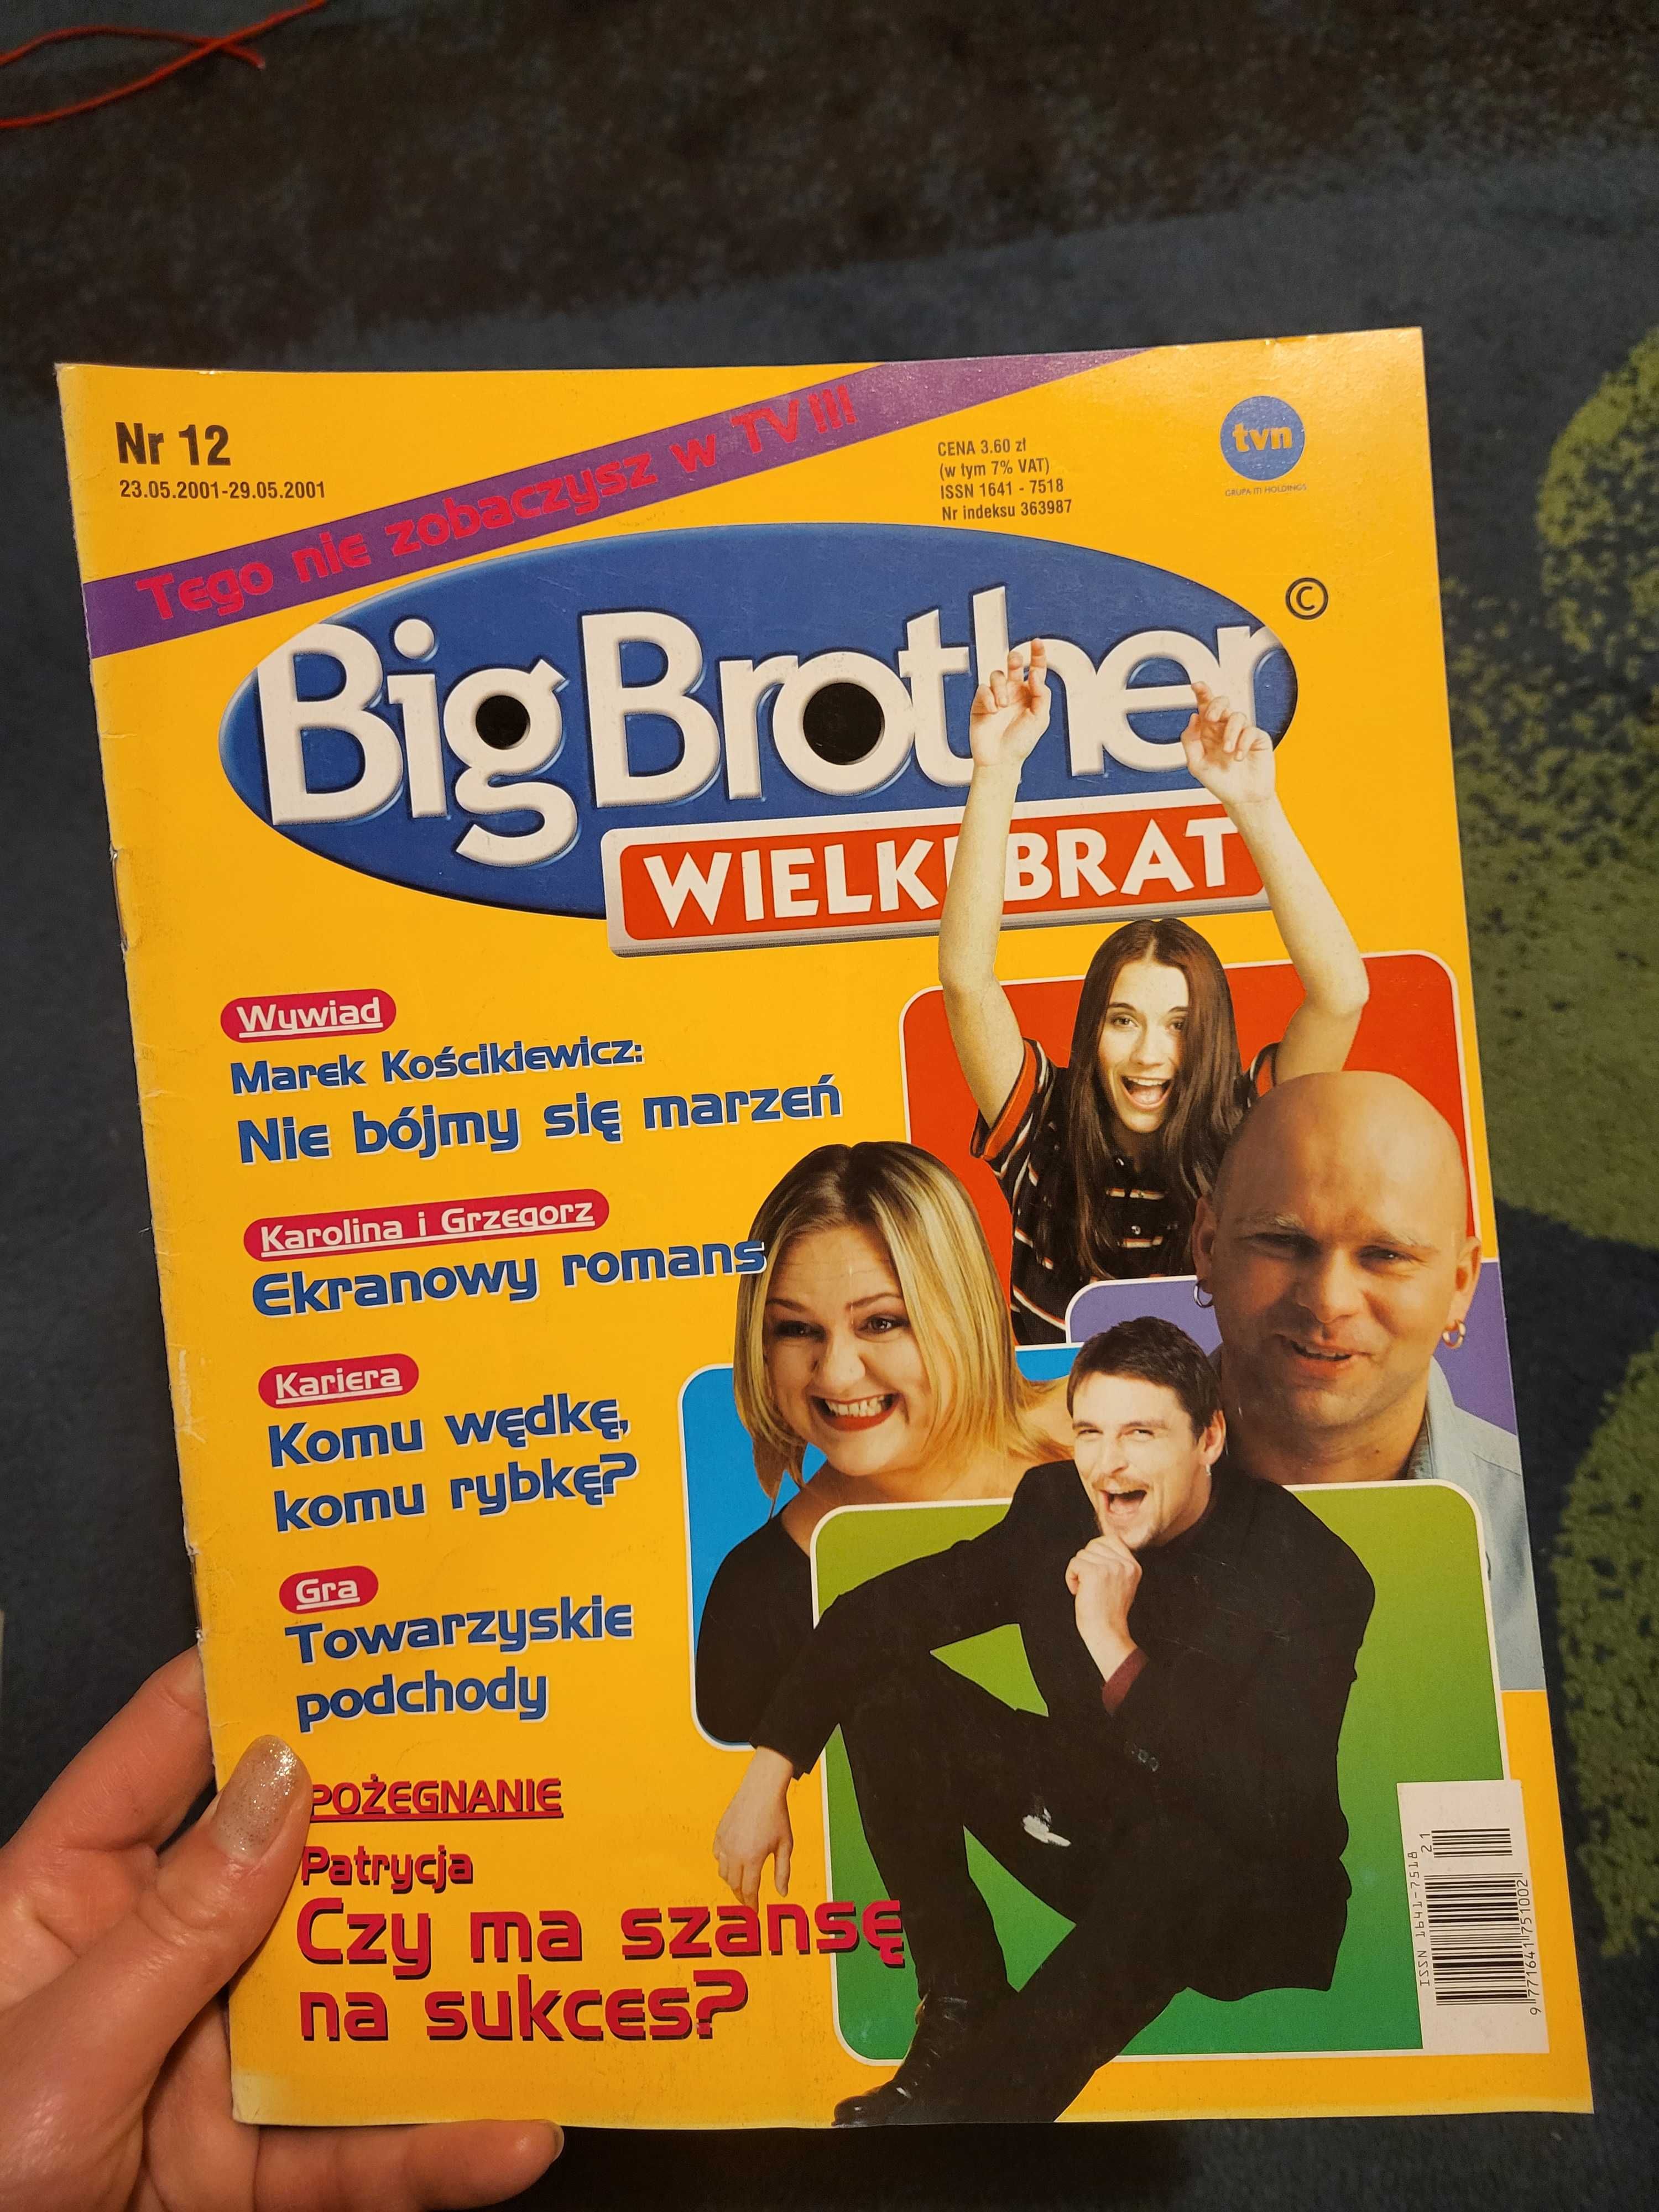 Big Brother czasopisma